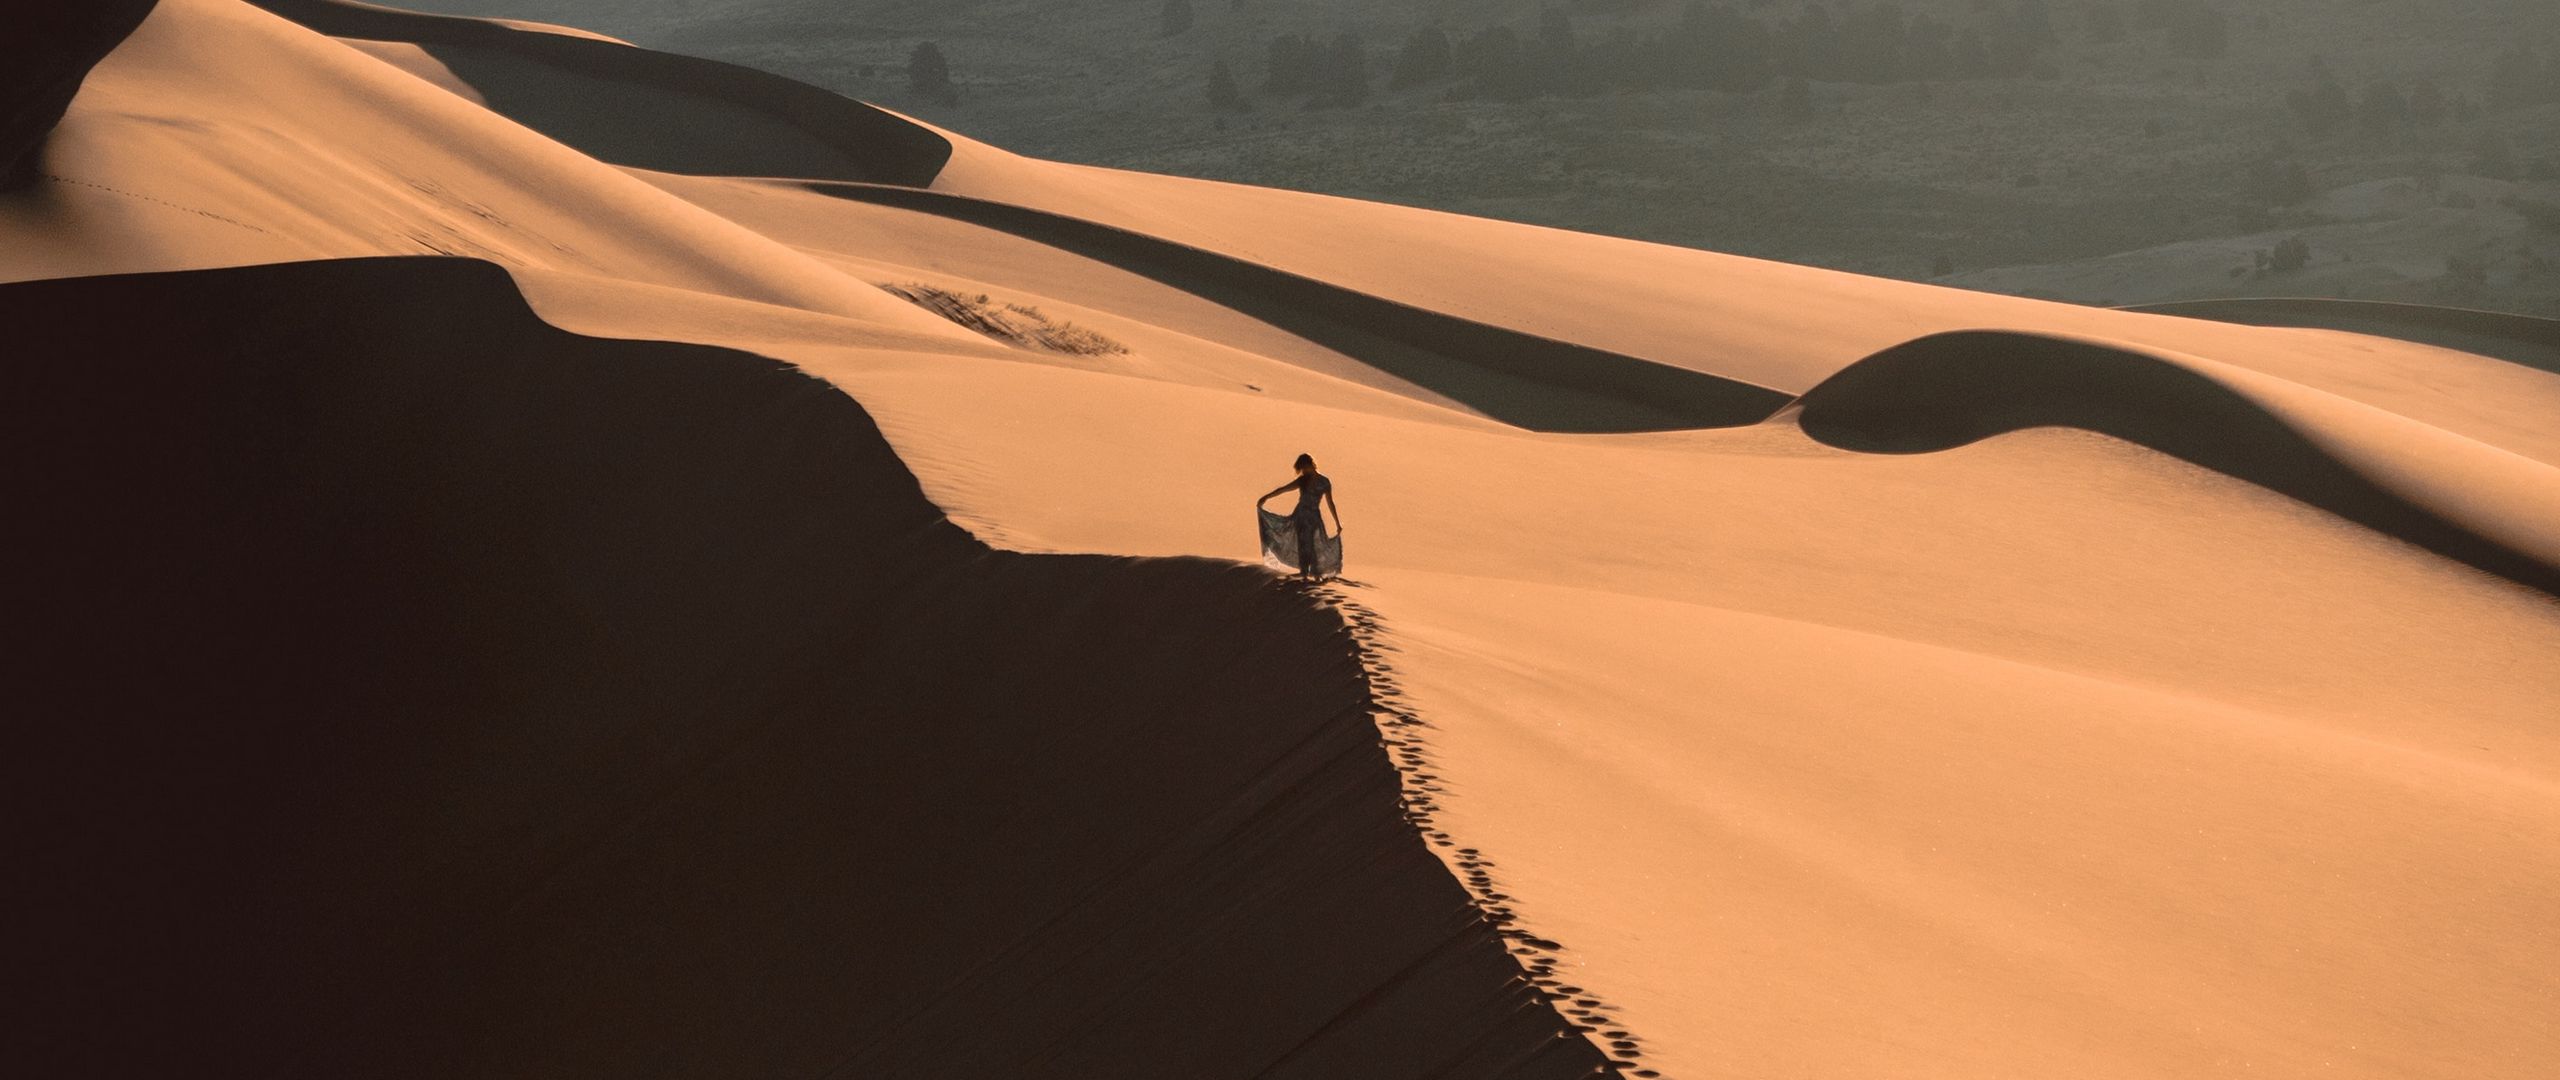 Download wallpaper 2560x1080 desert, sand, dune, man, traces dual wide ...